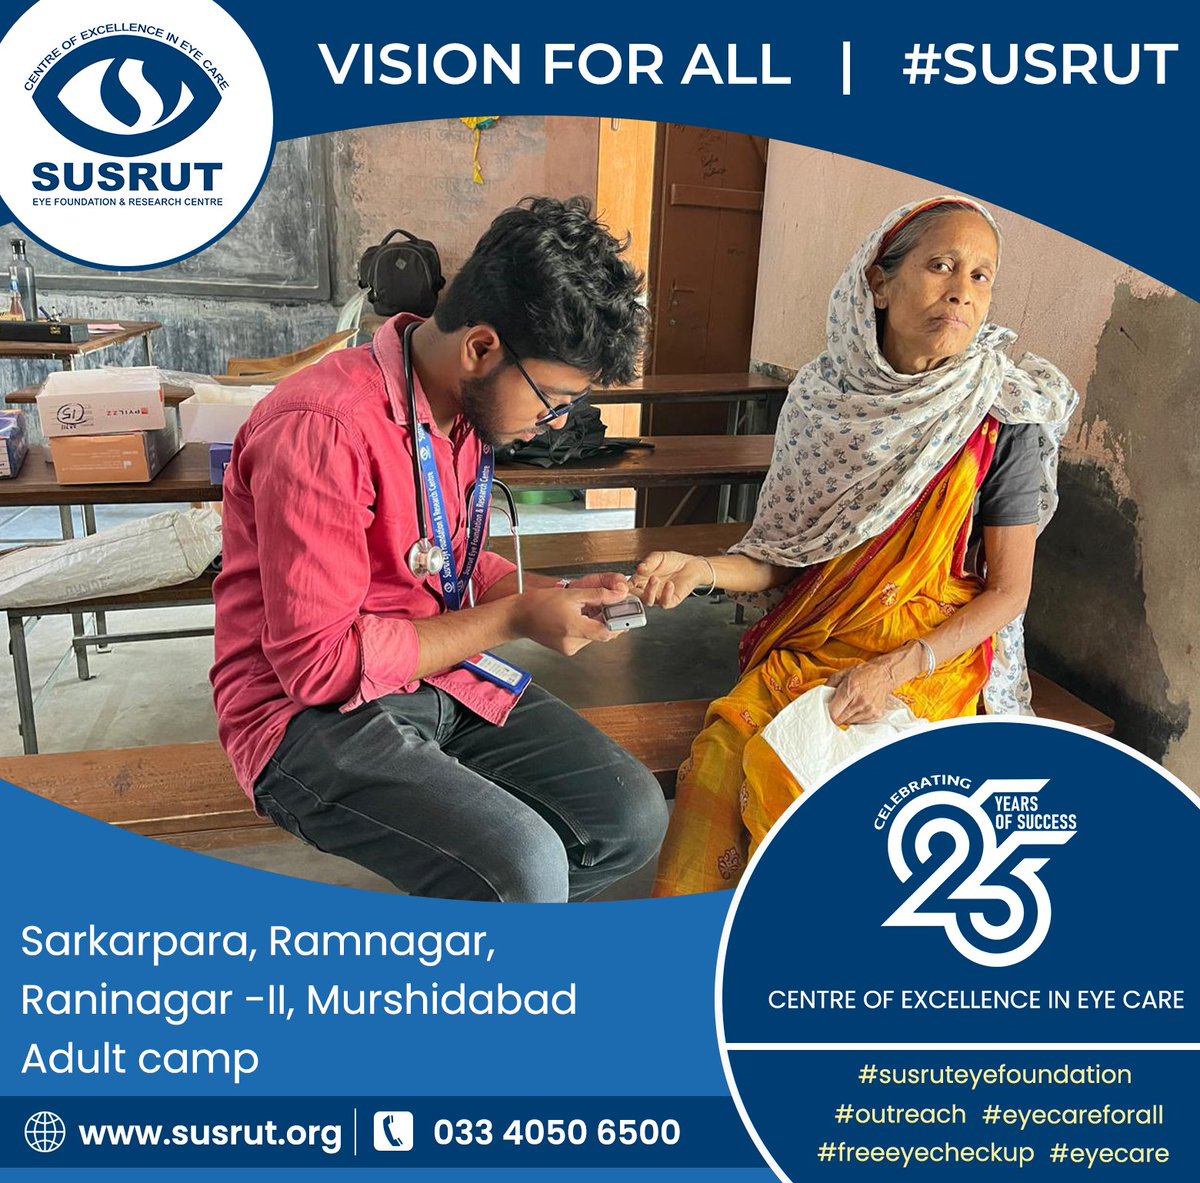 Sarkarpara, Ramnagar, Raninagar -II, Murshidabad adult camp & Diabetic Retinopathy Camp Jaynagar 12 No word Jaynagar 1 Block, South 24 parganas.
susrut.org
.
.
.
#susrut #susruteyefoundation #eyecamp #visioncentre